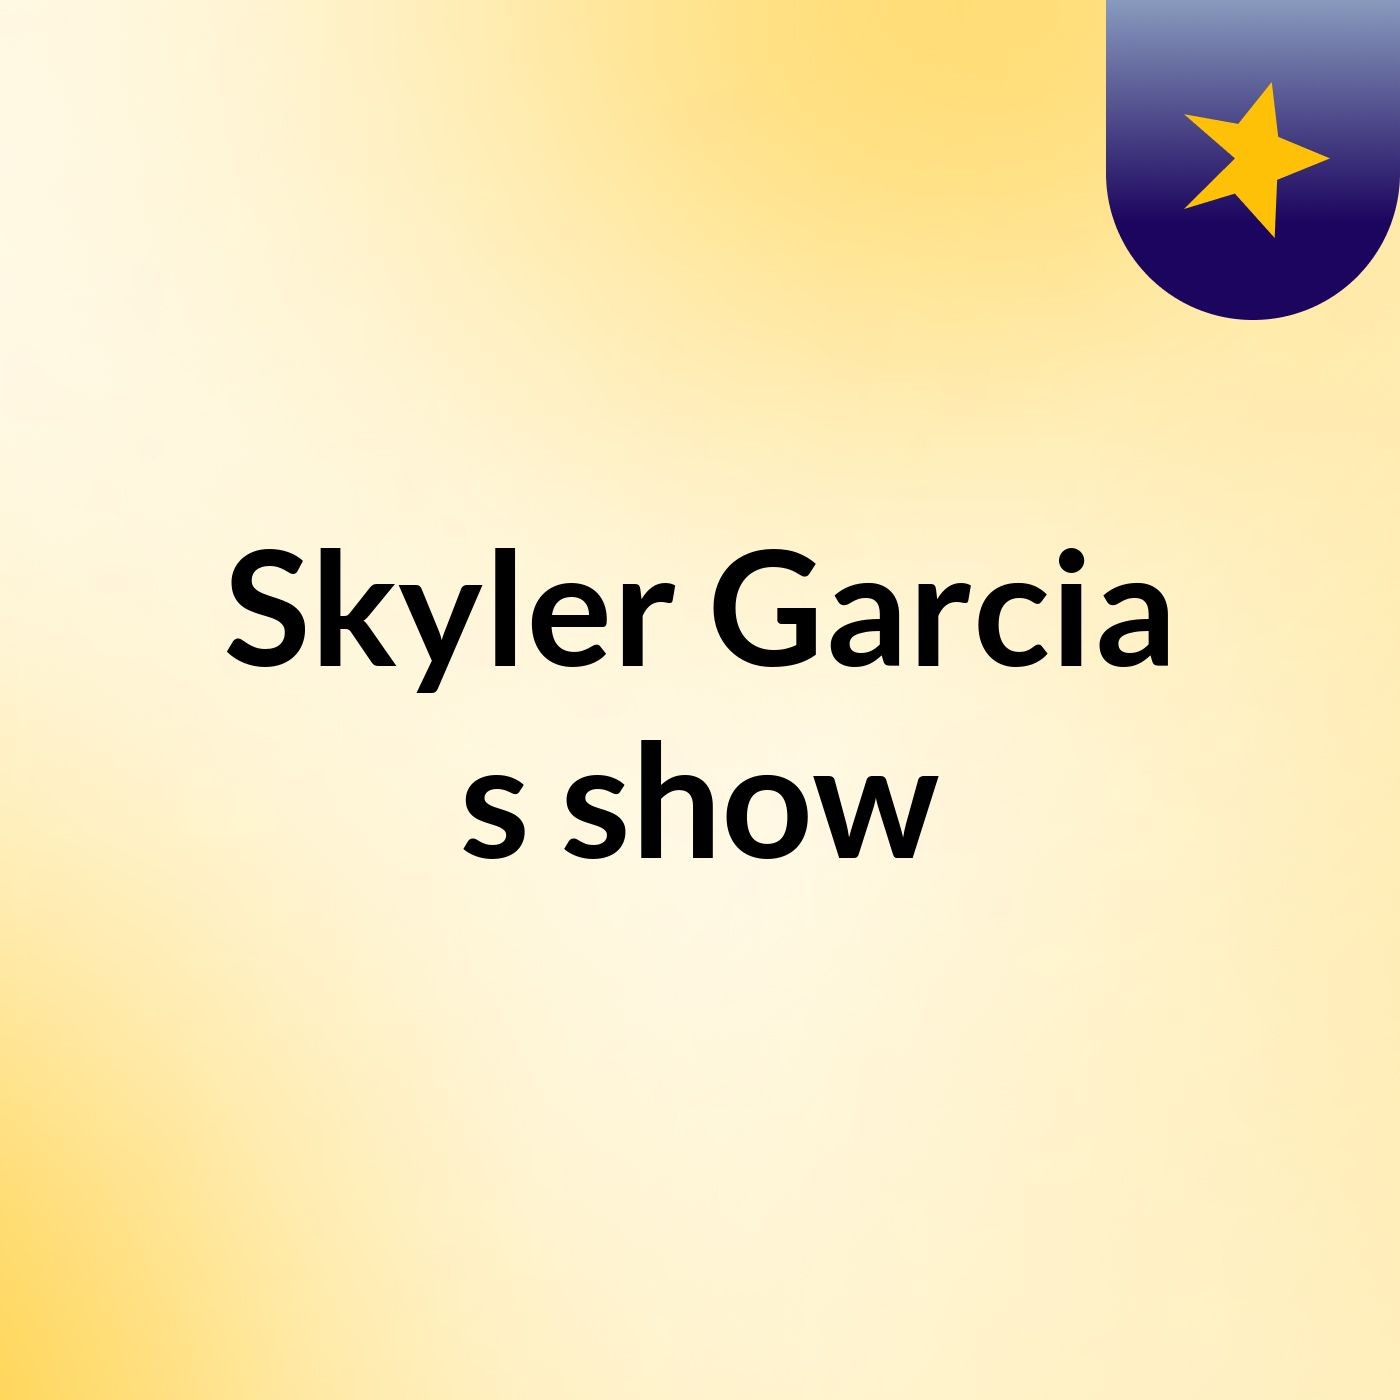 Skyler Garcia's show